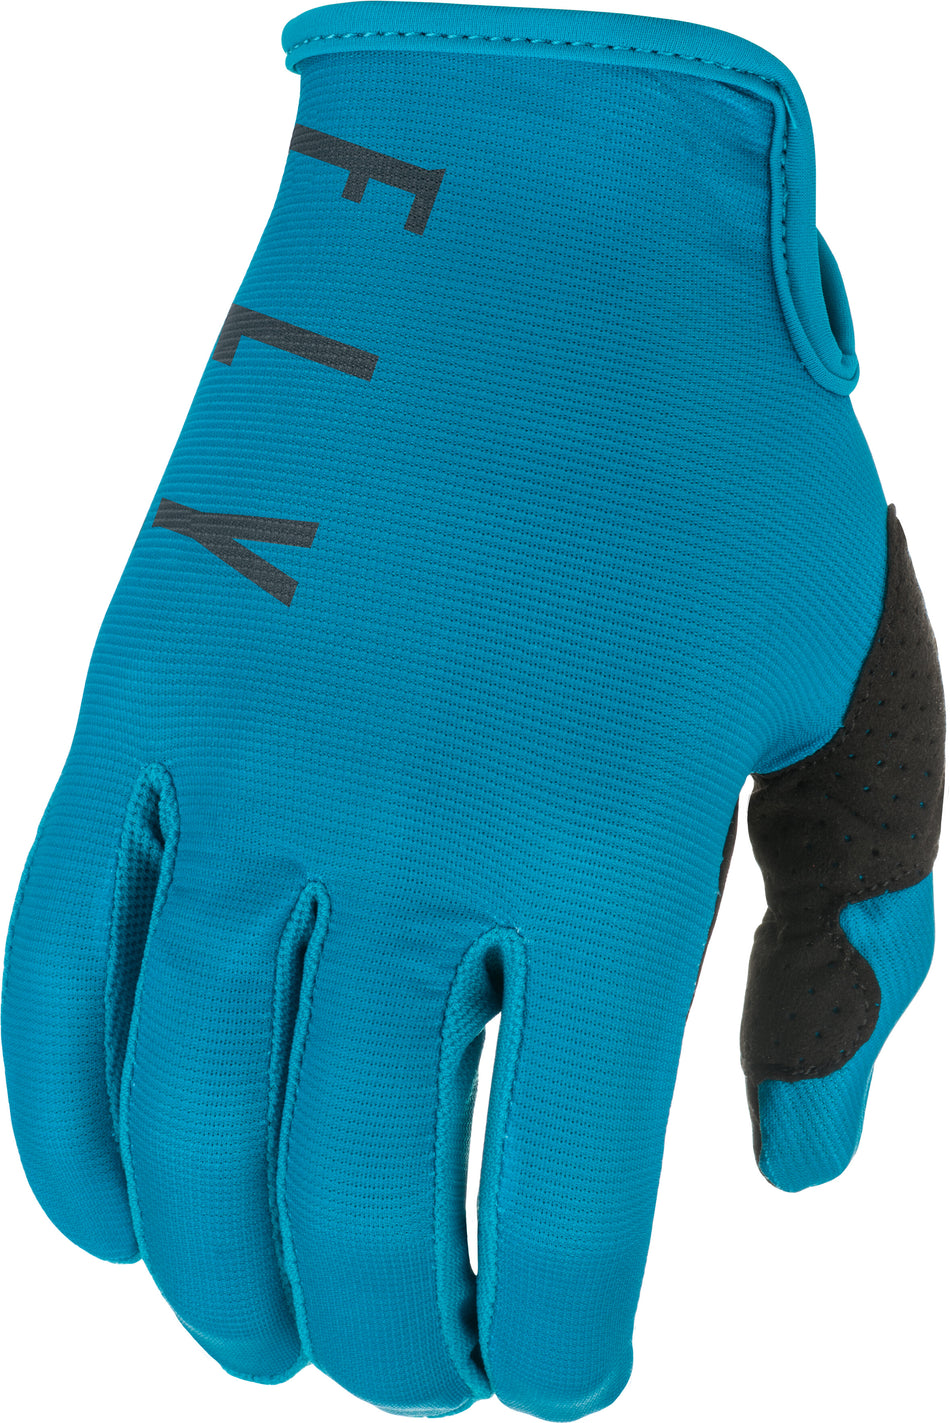 FLY RACING Lite Gloves Blue/Grey Sz 12 374-71112